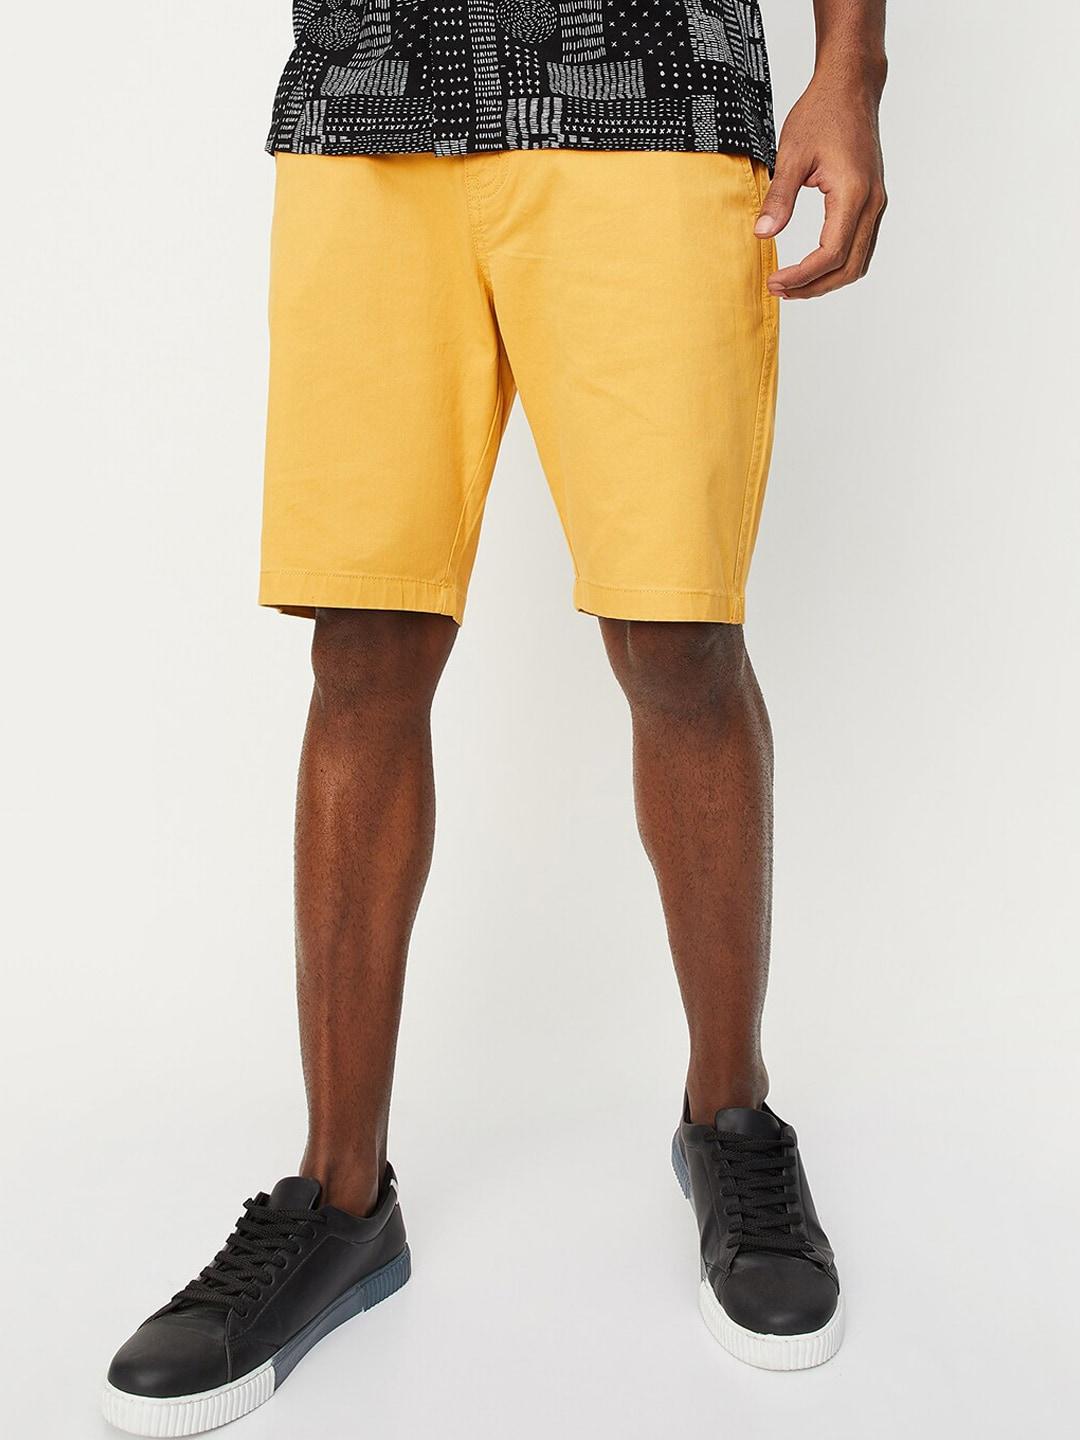 max men yellow shorts